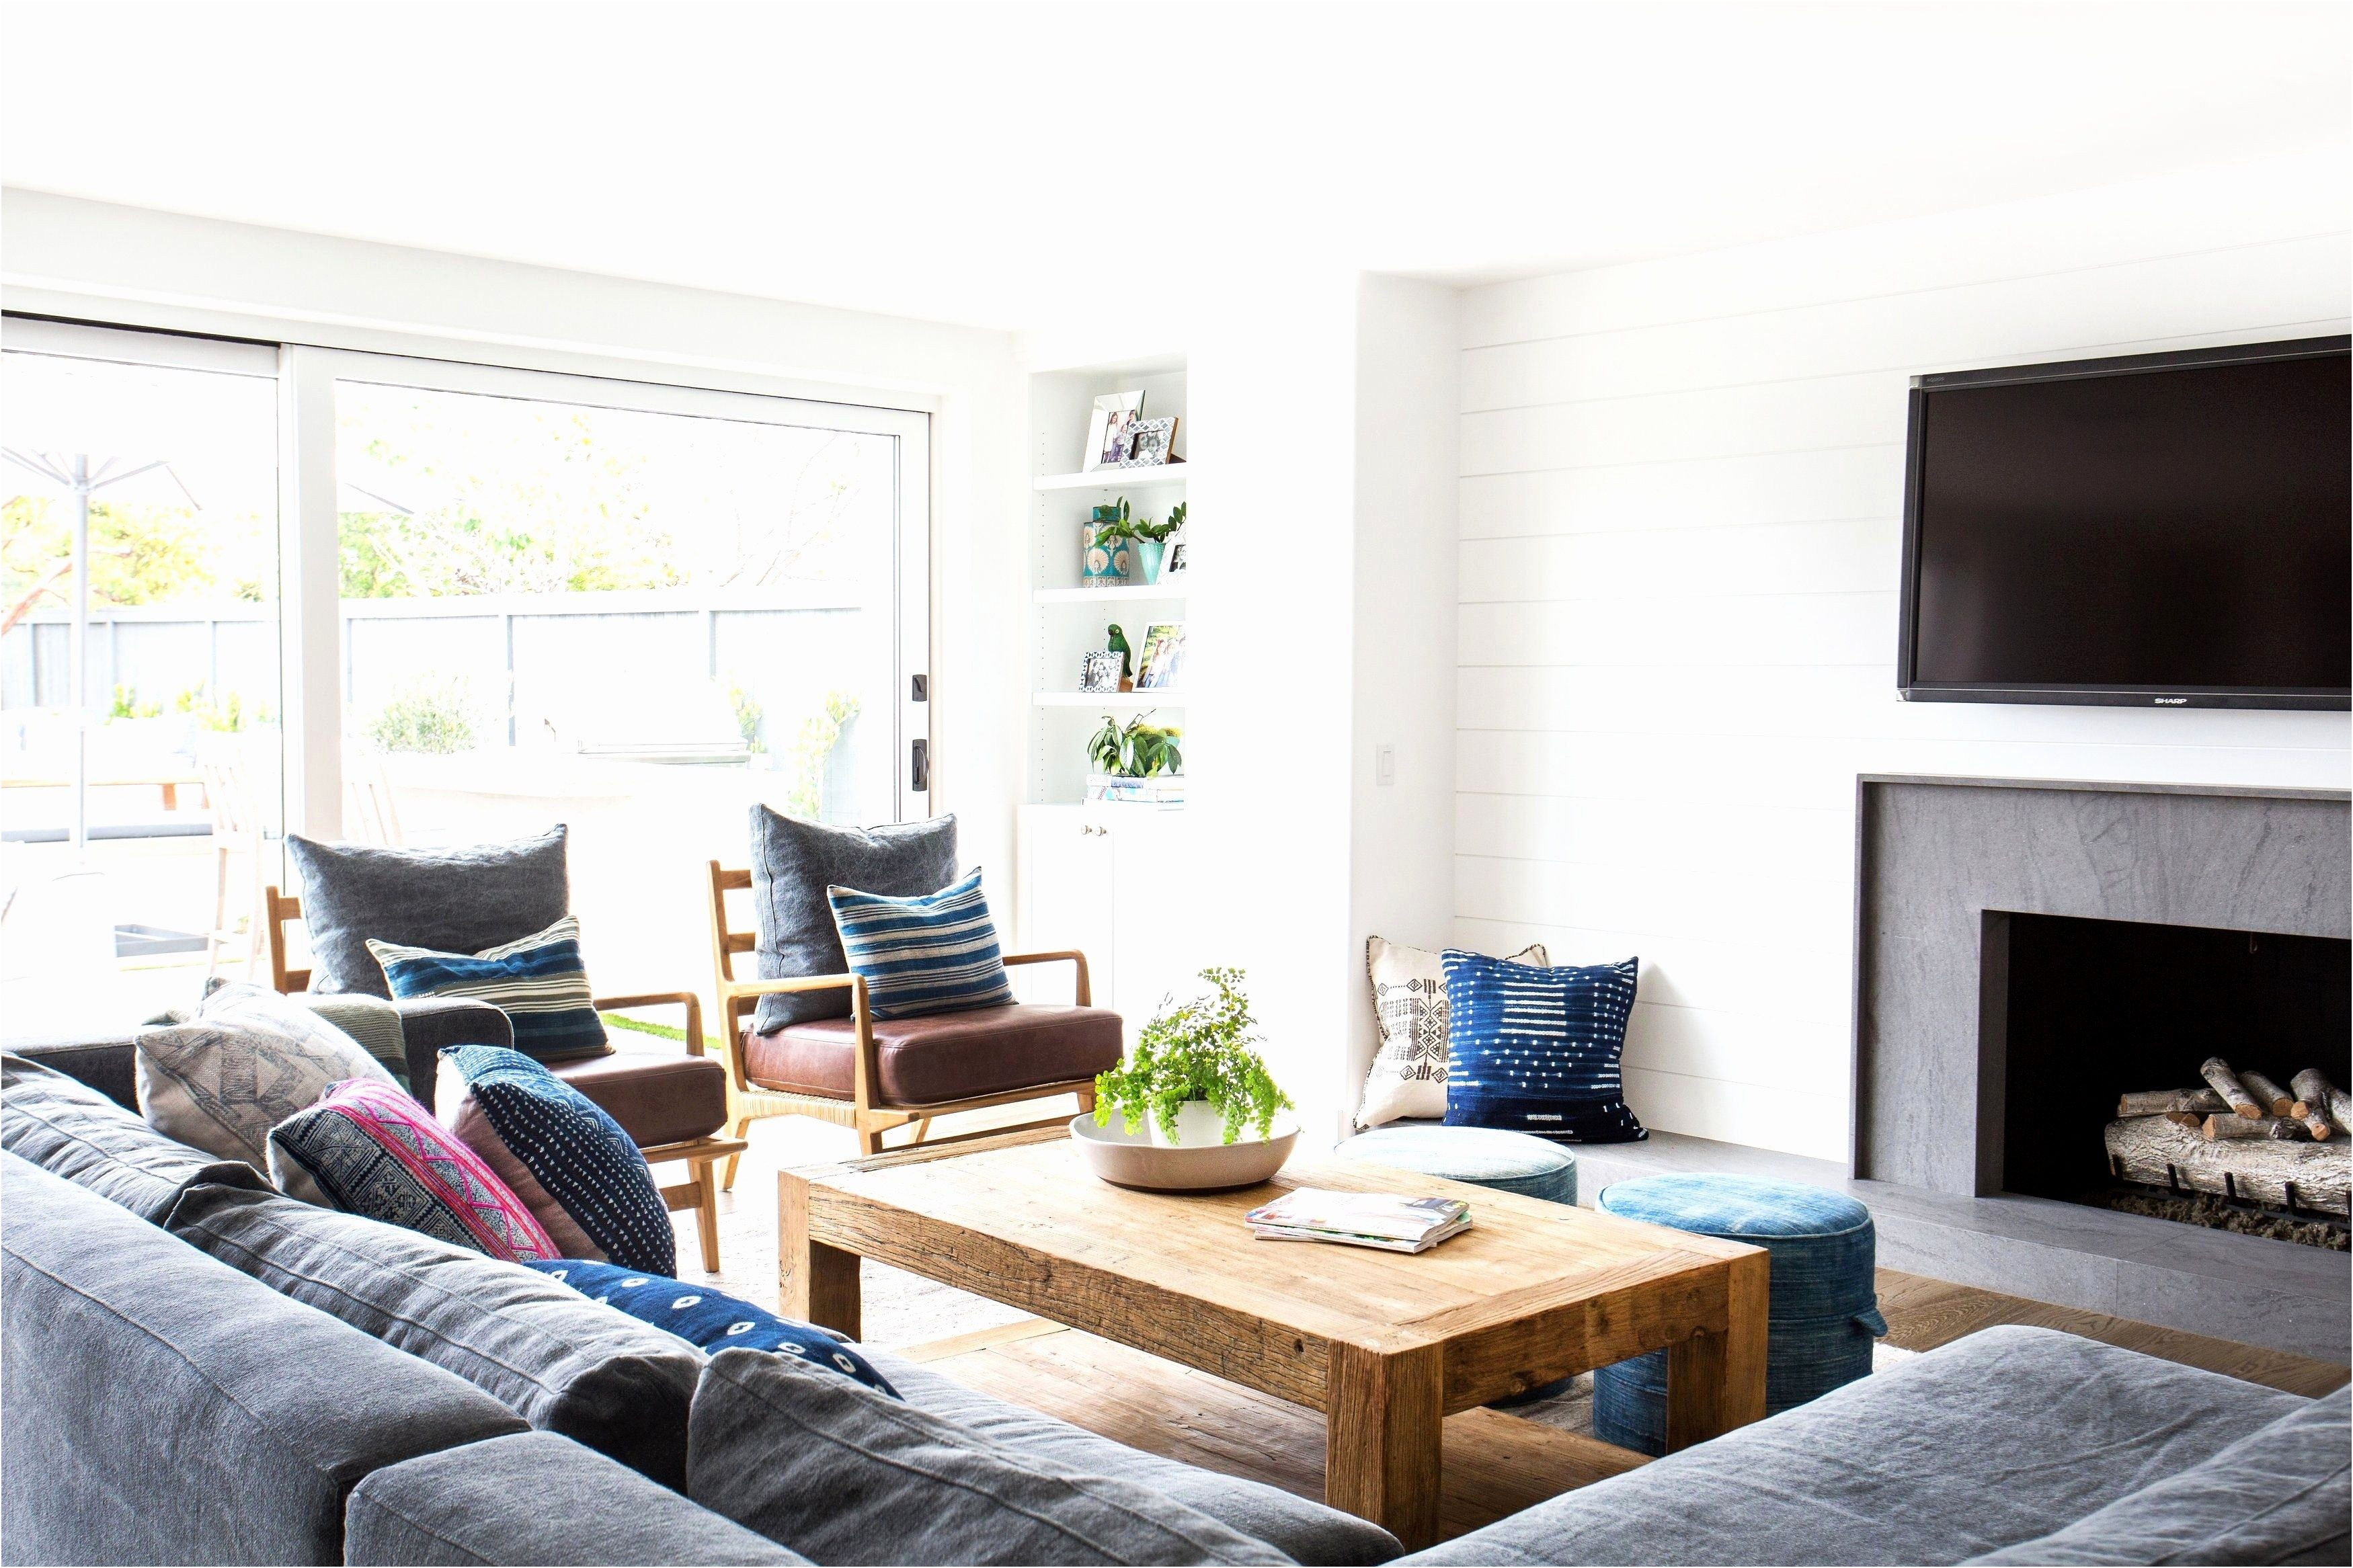 Elegant Fireplace Design In Living Room